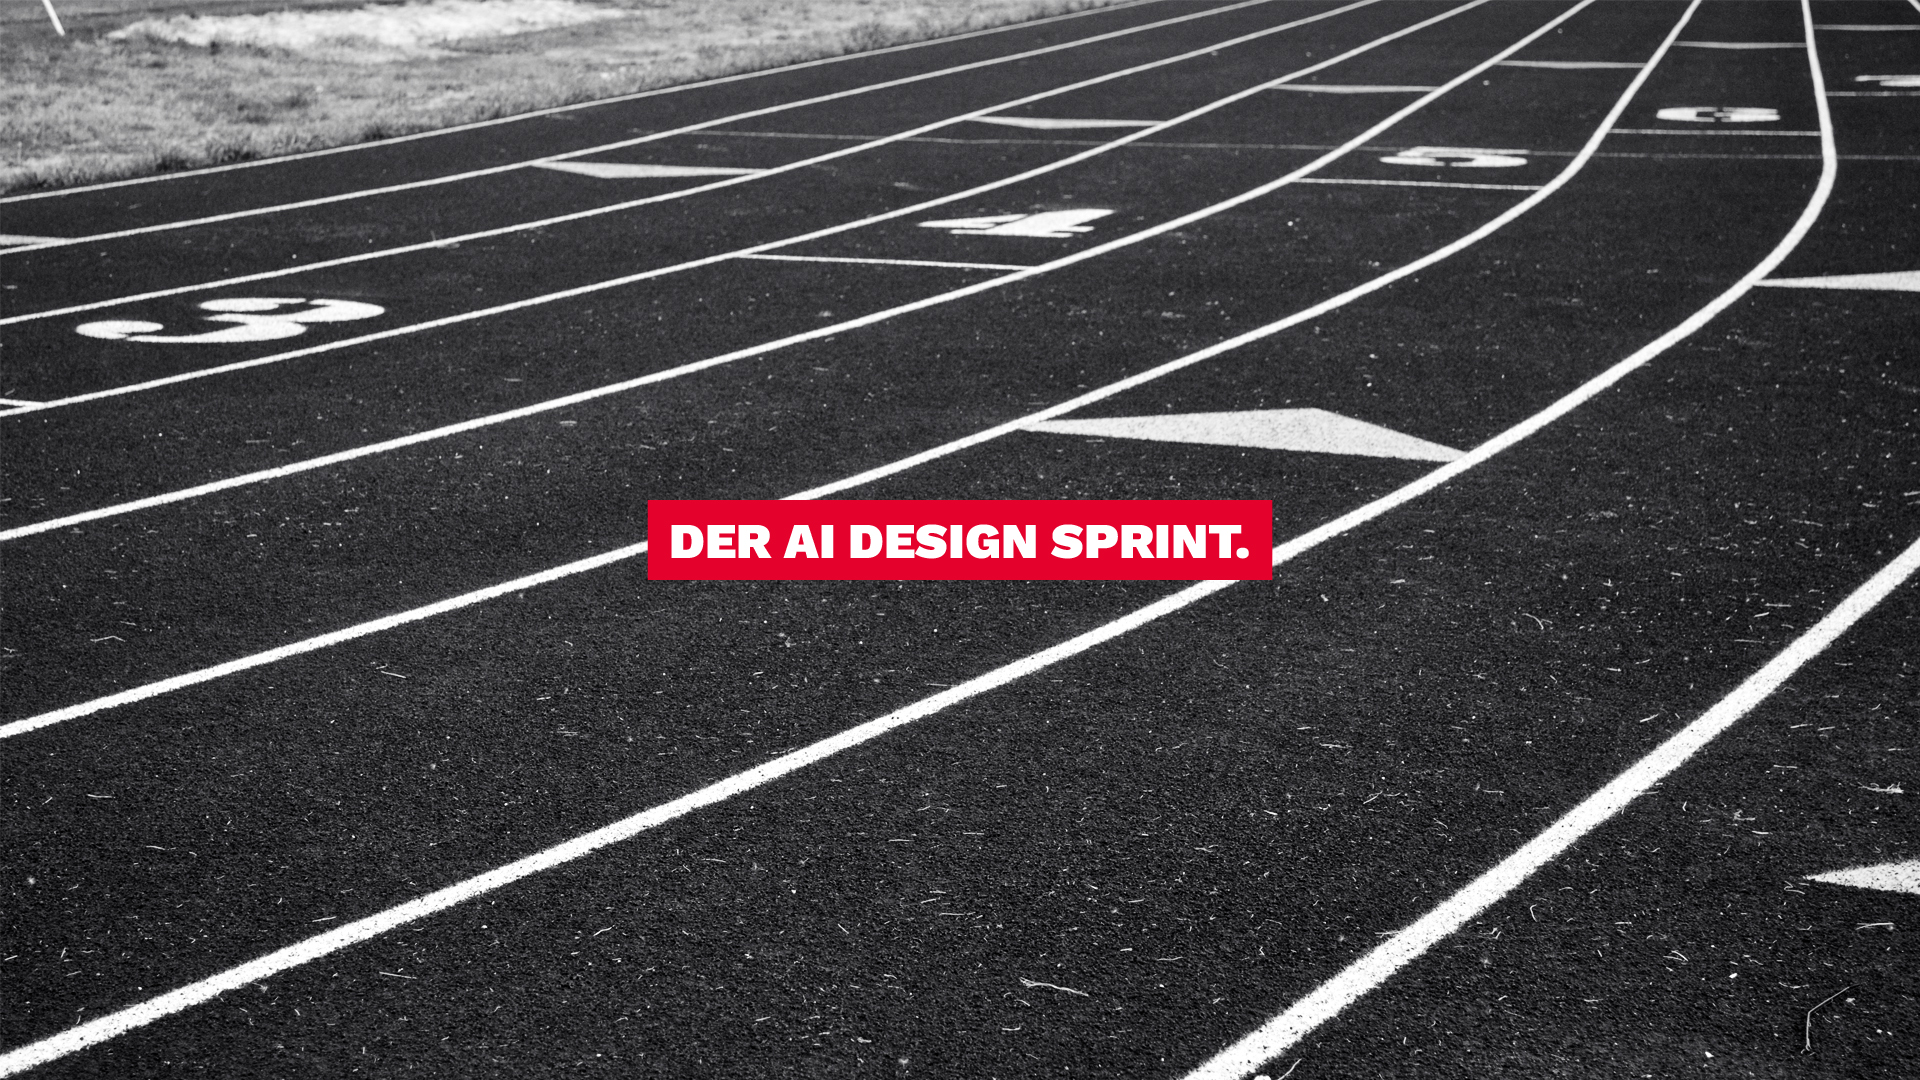 Der Ai Design Sprint.